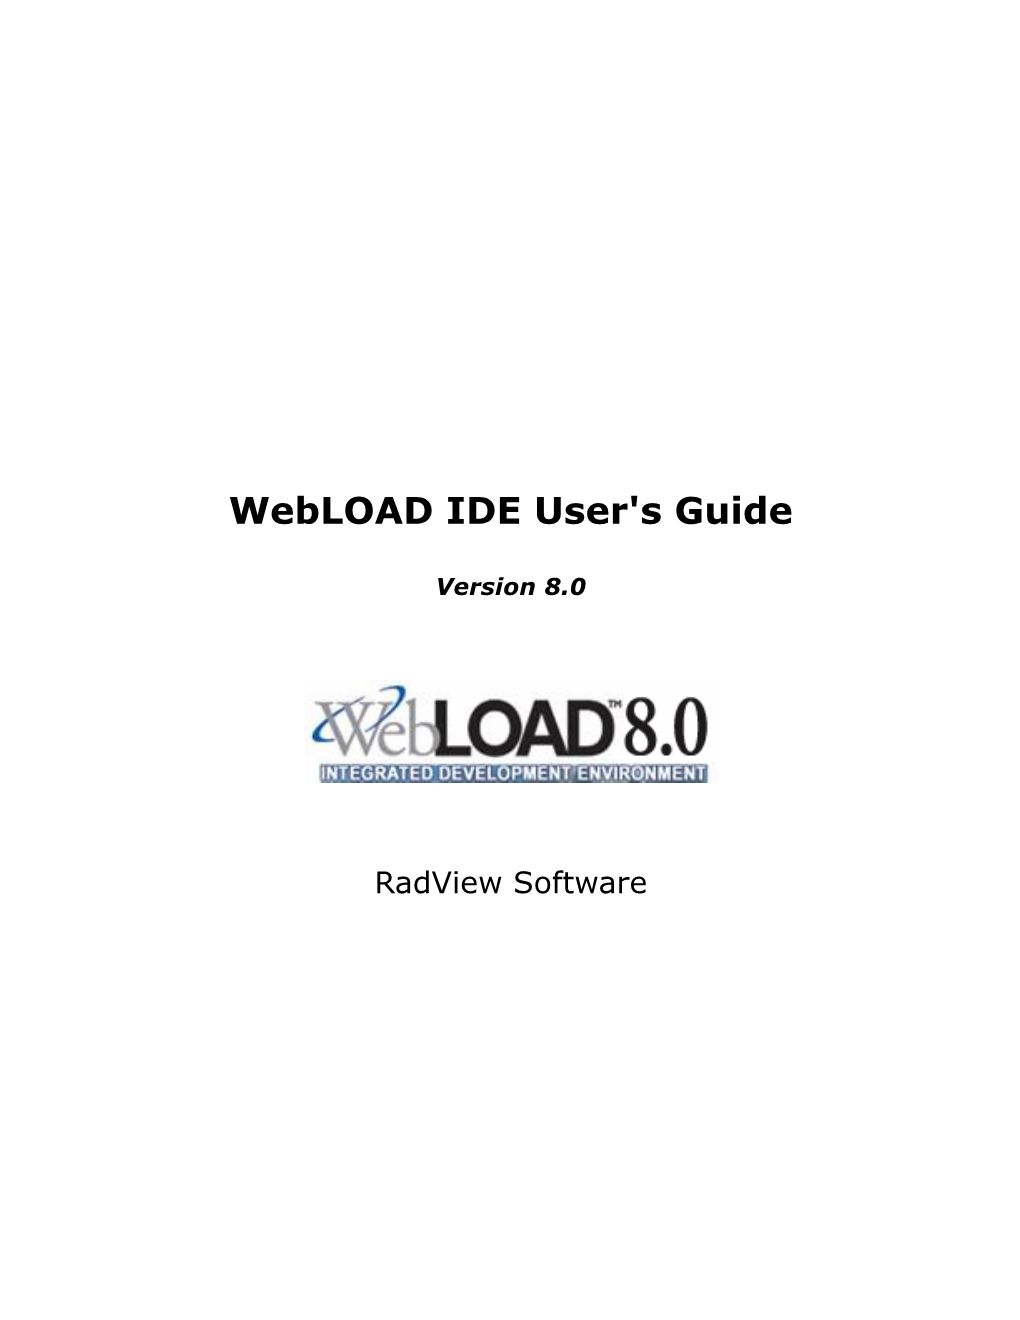 Webload IDE User's Guide